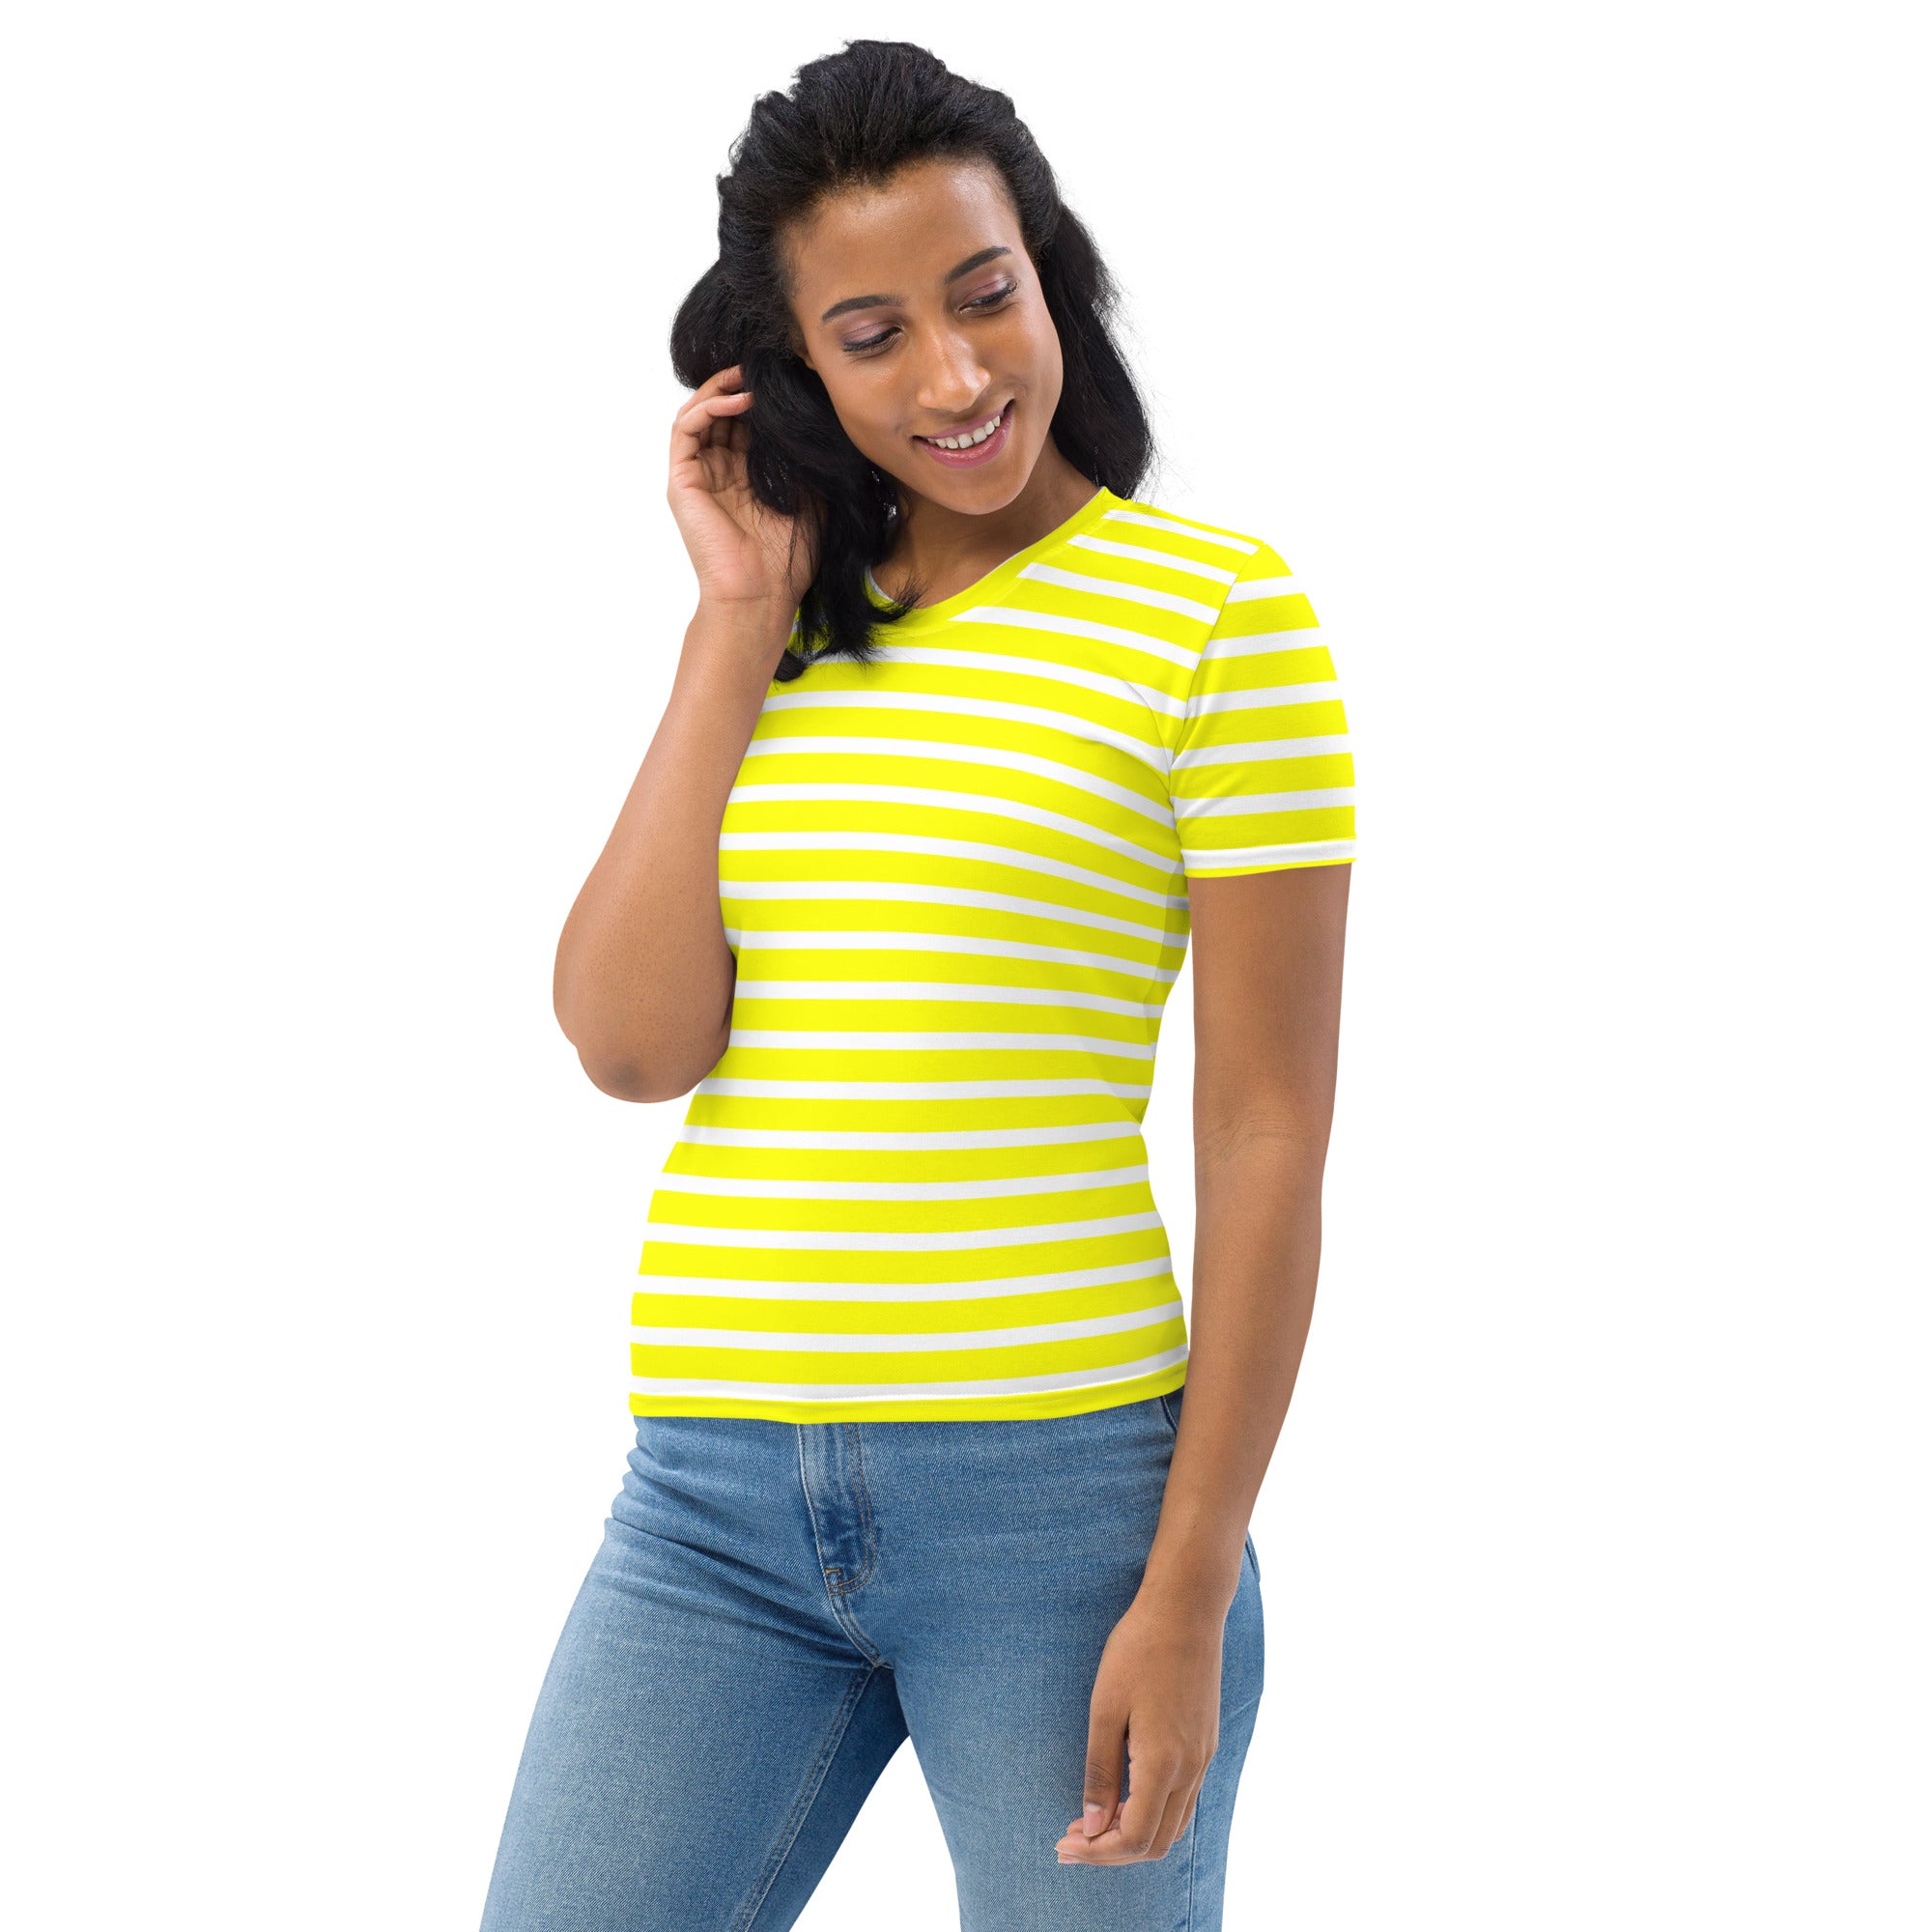 Women's T-shirt- White and Yellow Striped